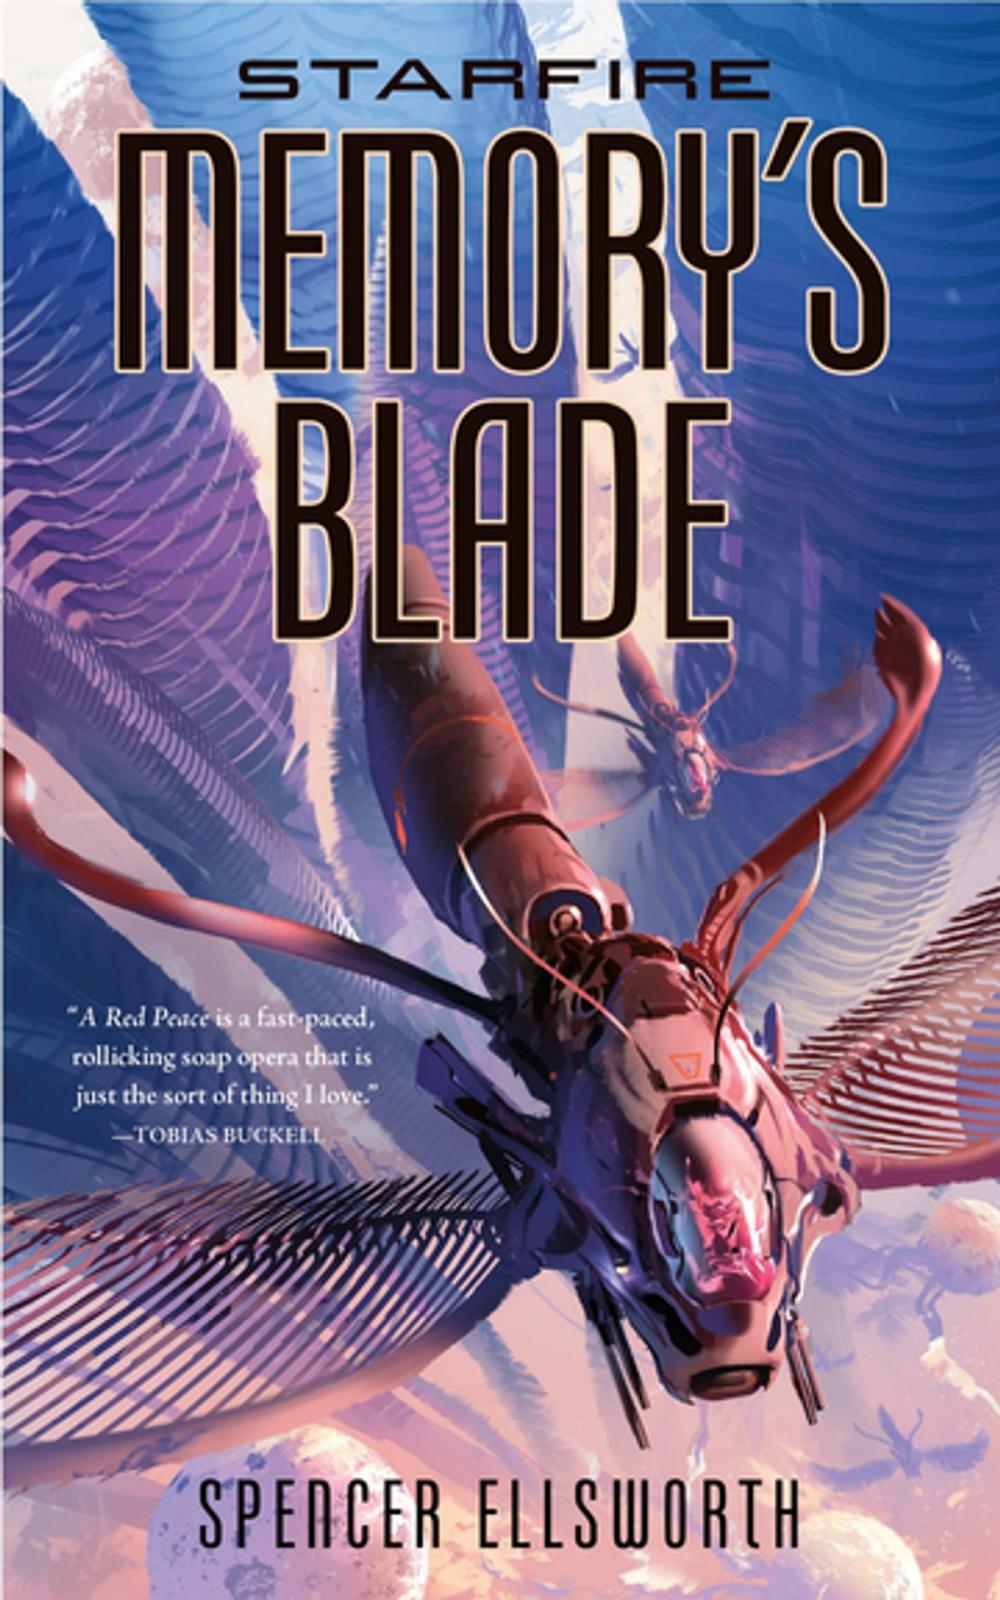 Big bigCover of Starfire: Memory's Blade